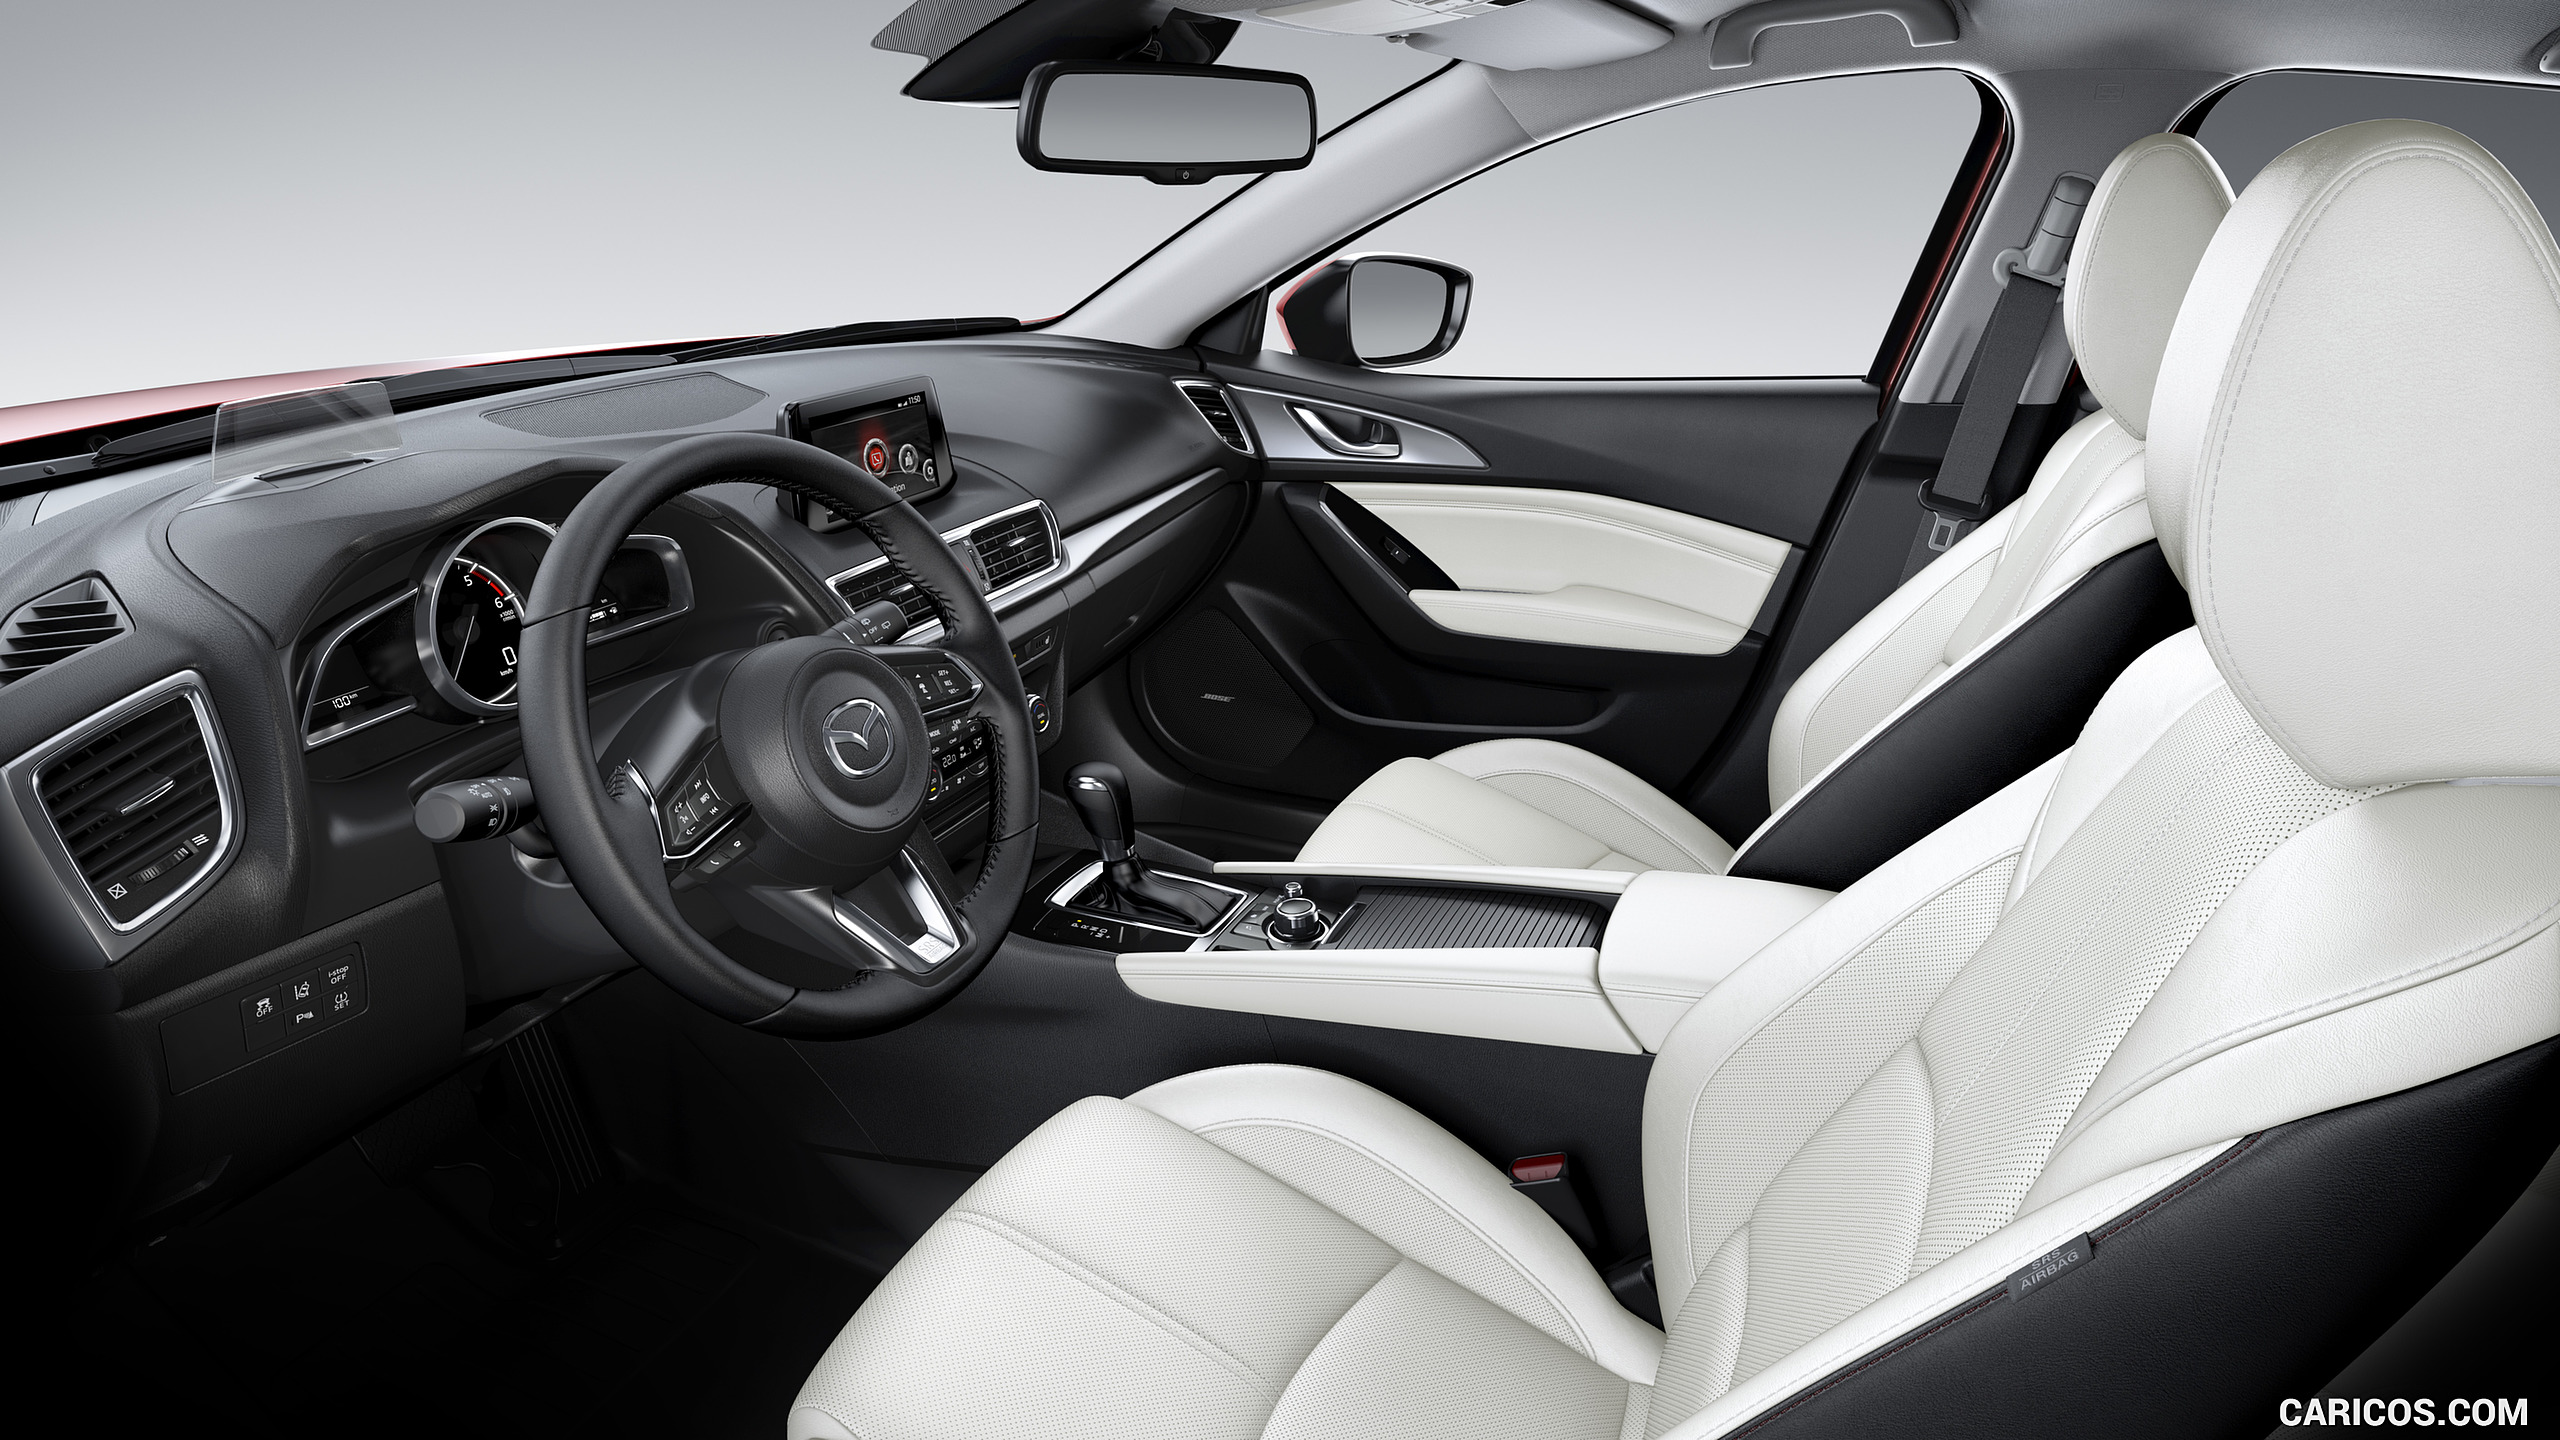 2017 Mazda 3 Sedan - Interior, Seats, #11 of 13